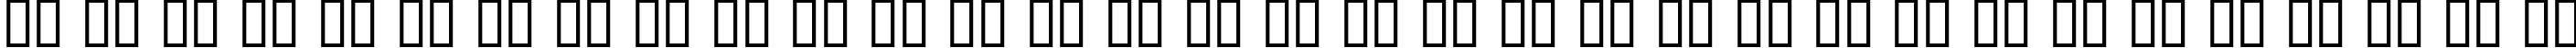 Пример написания русского алфавита шрифтом Edgewater